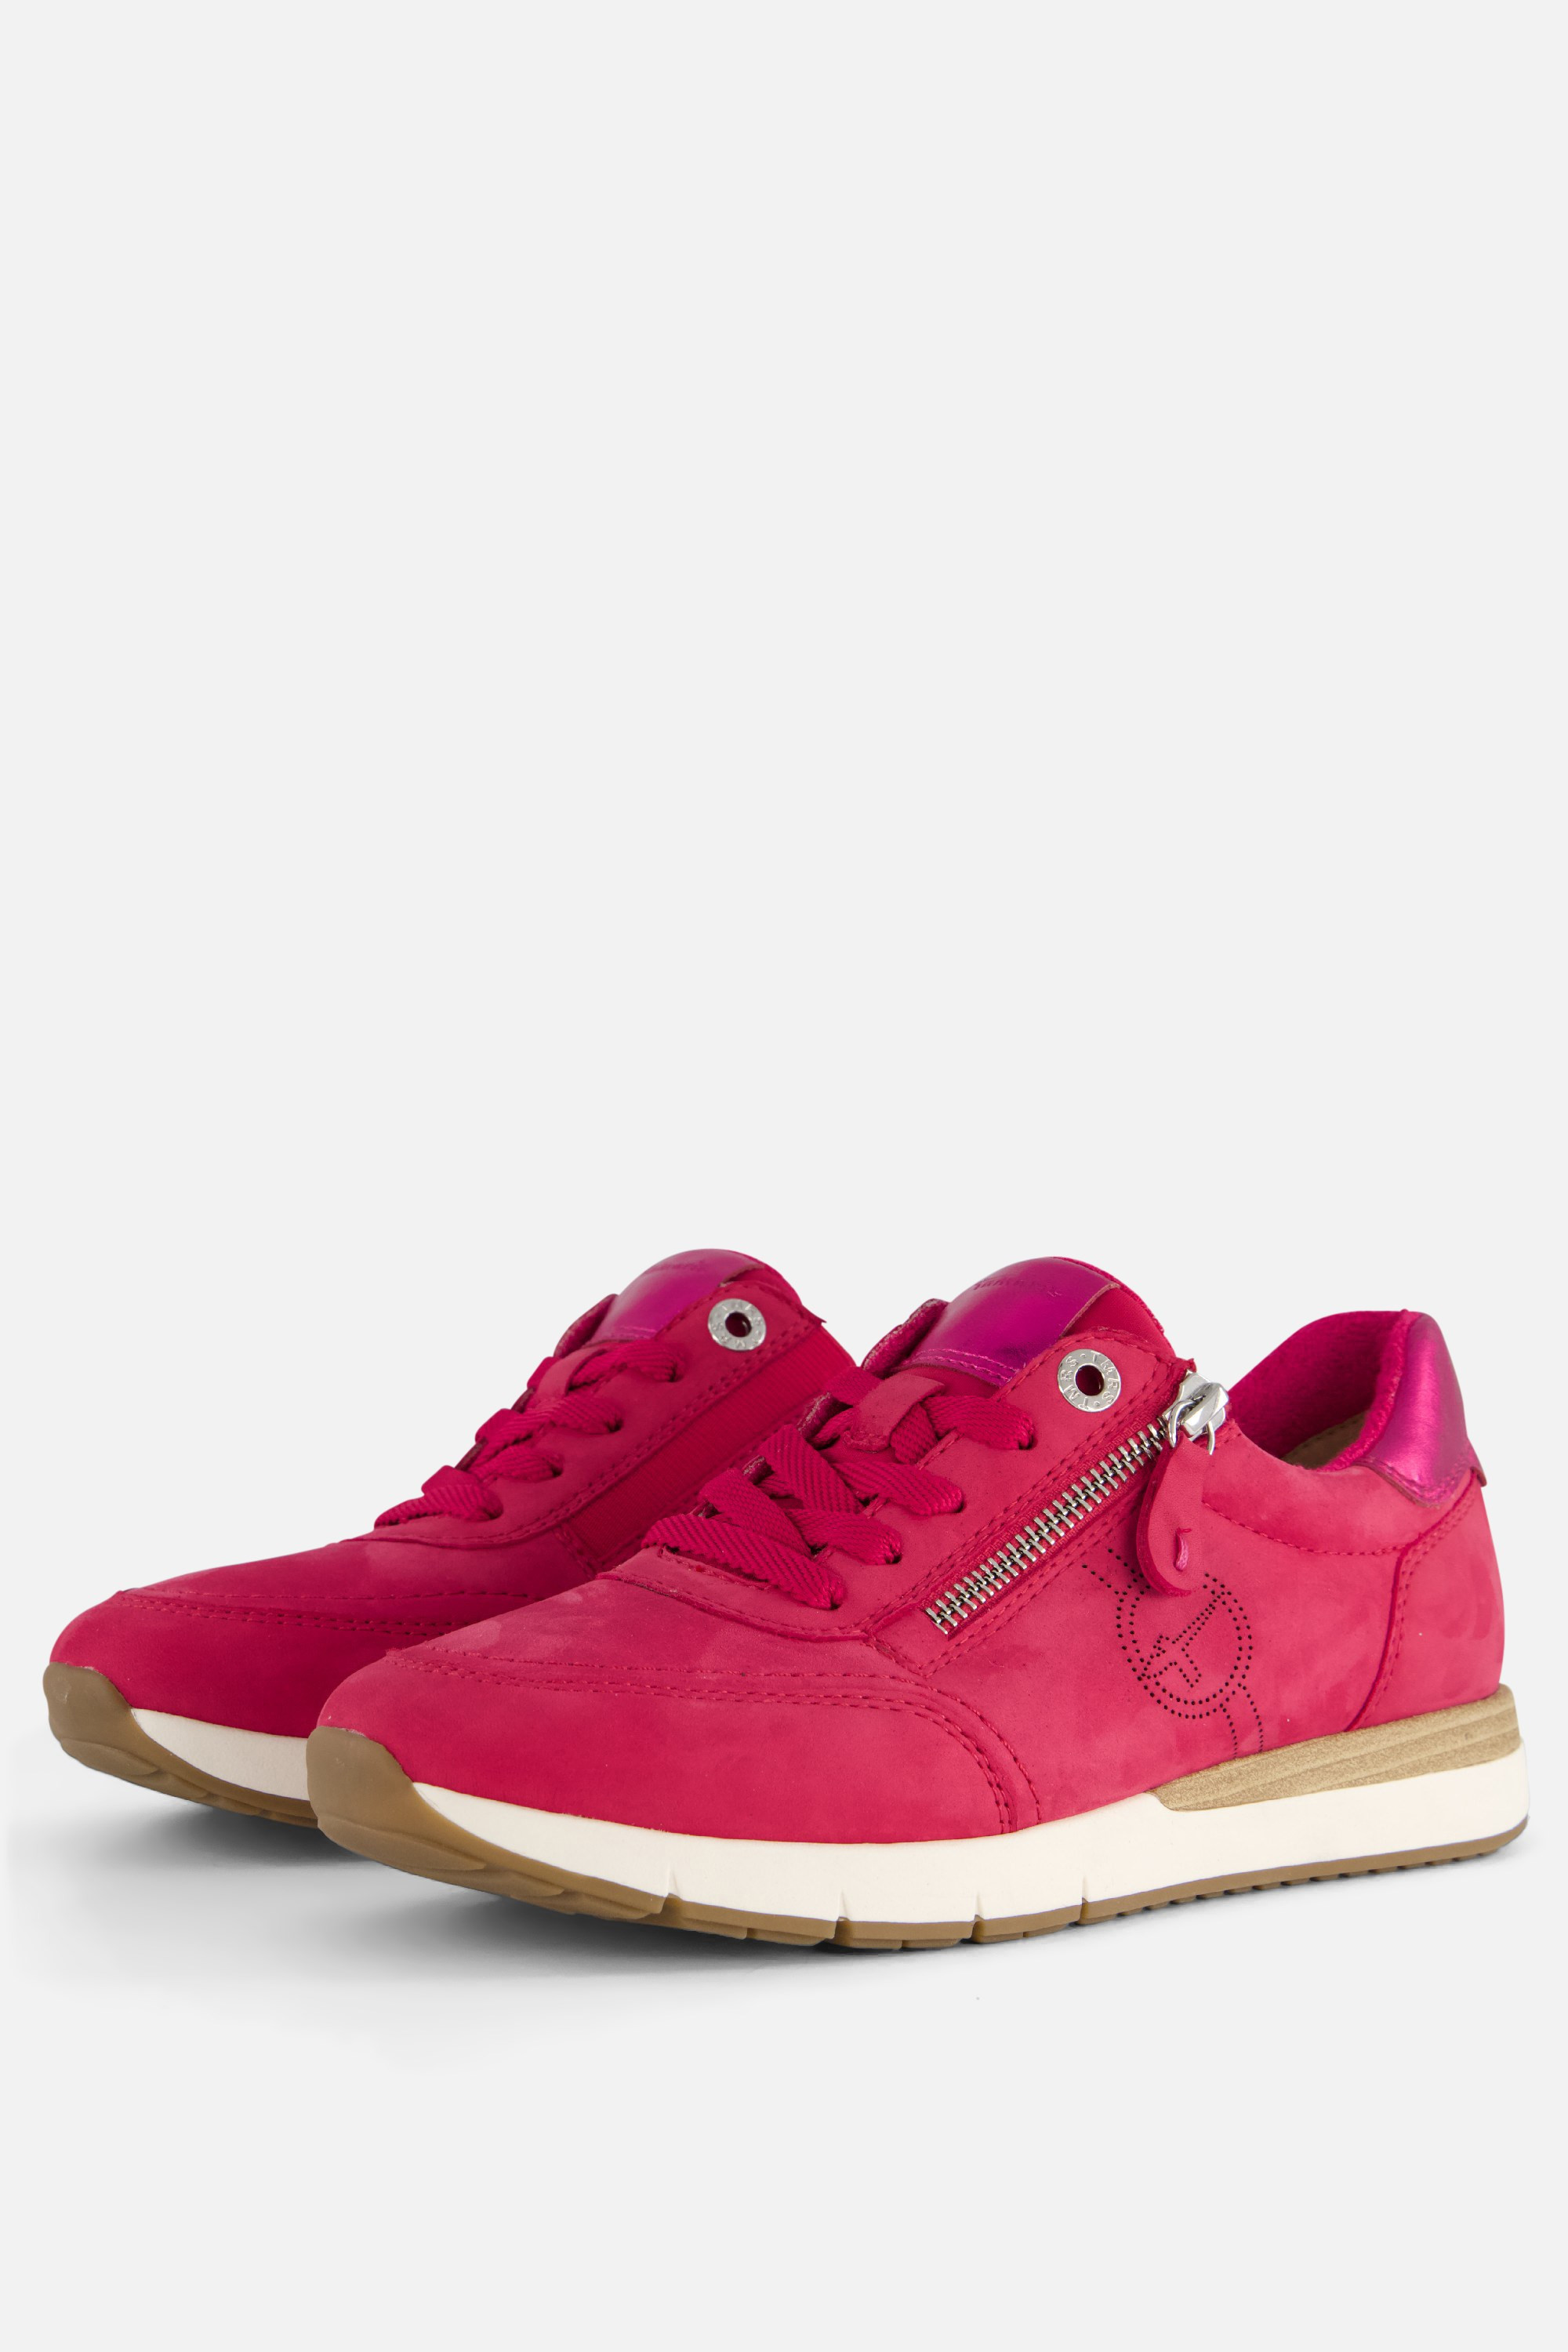 Tamaris Tamaris Comfort Sneakers roze Leer